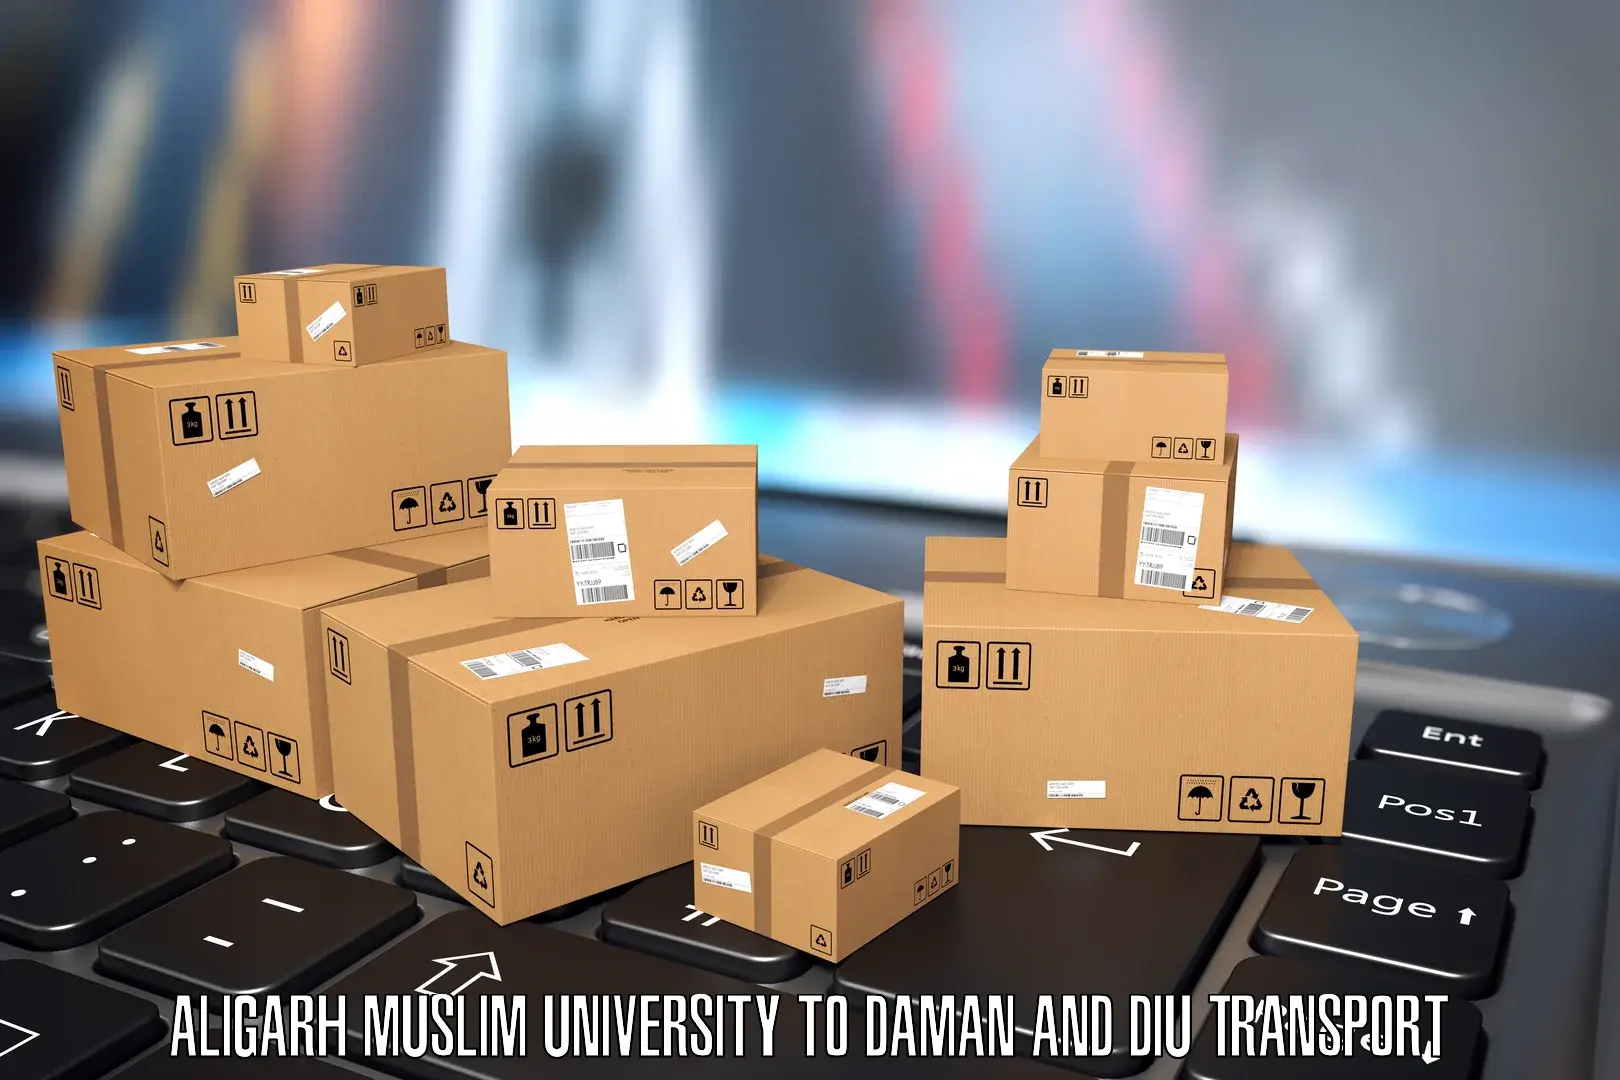 Daily transport service Aligarh Muslim University to Diu